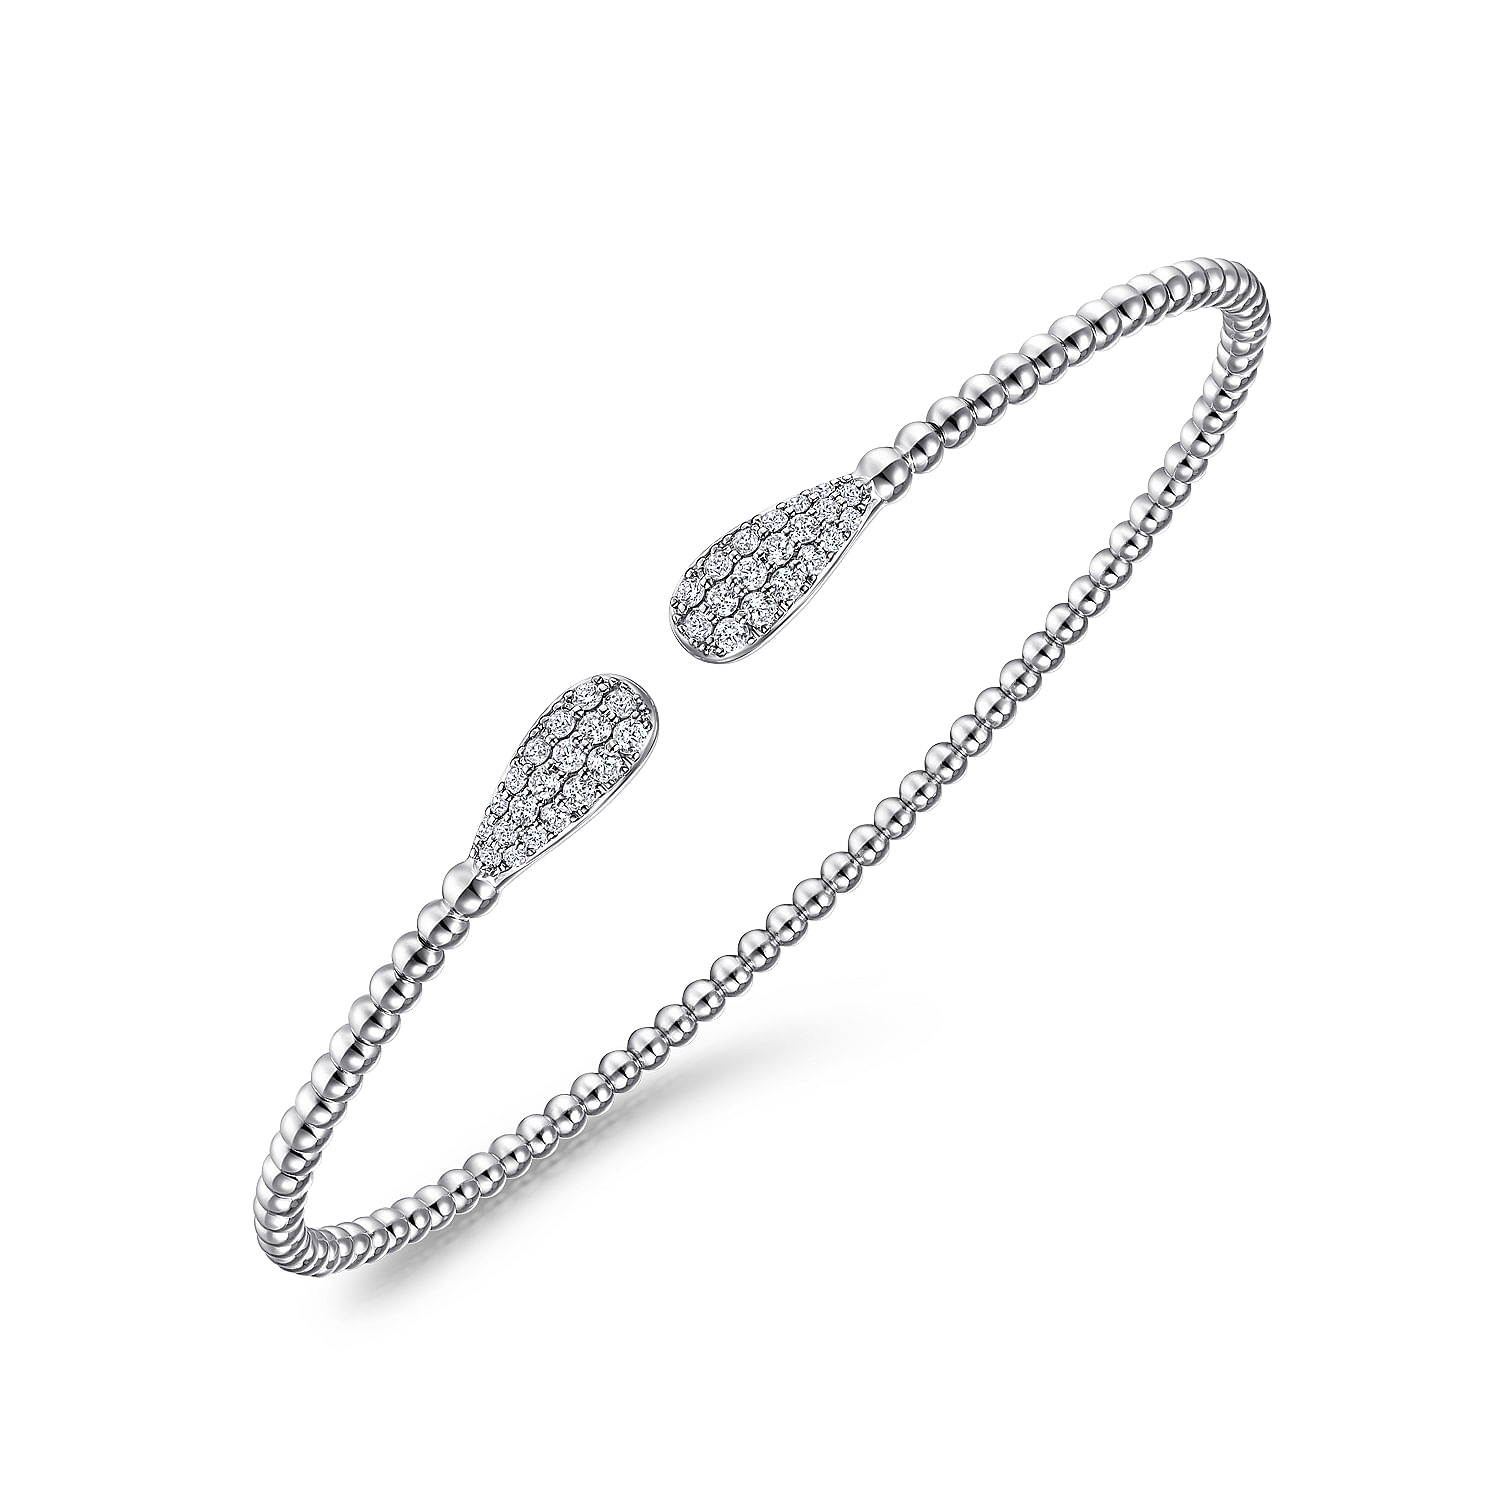 14K White Gold Bujukan Bead Cuff Bracelet with Diamond Pavé Teardrops 